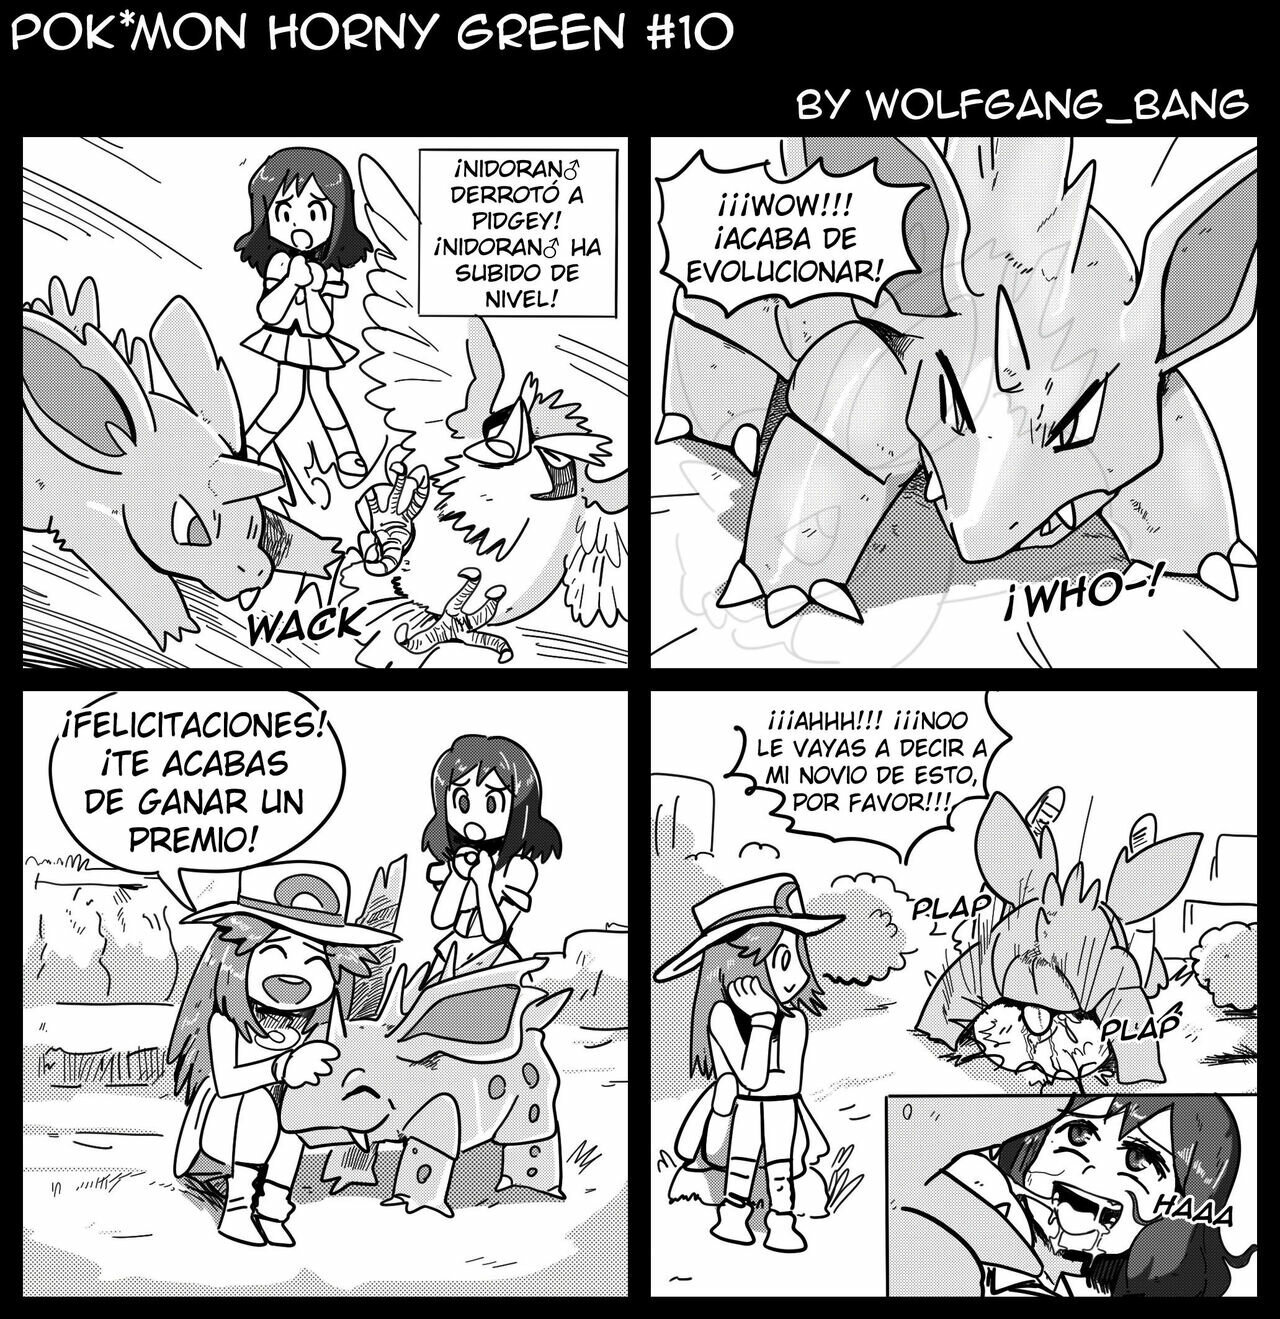 Pokemon HornyGreen by Wolfrad Senpai - 10